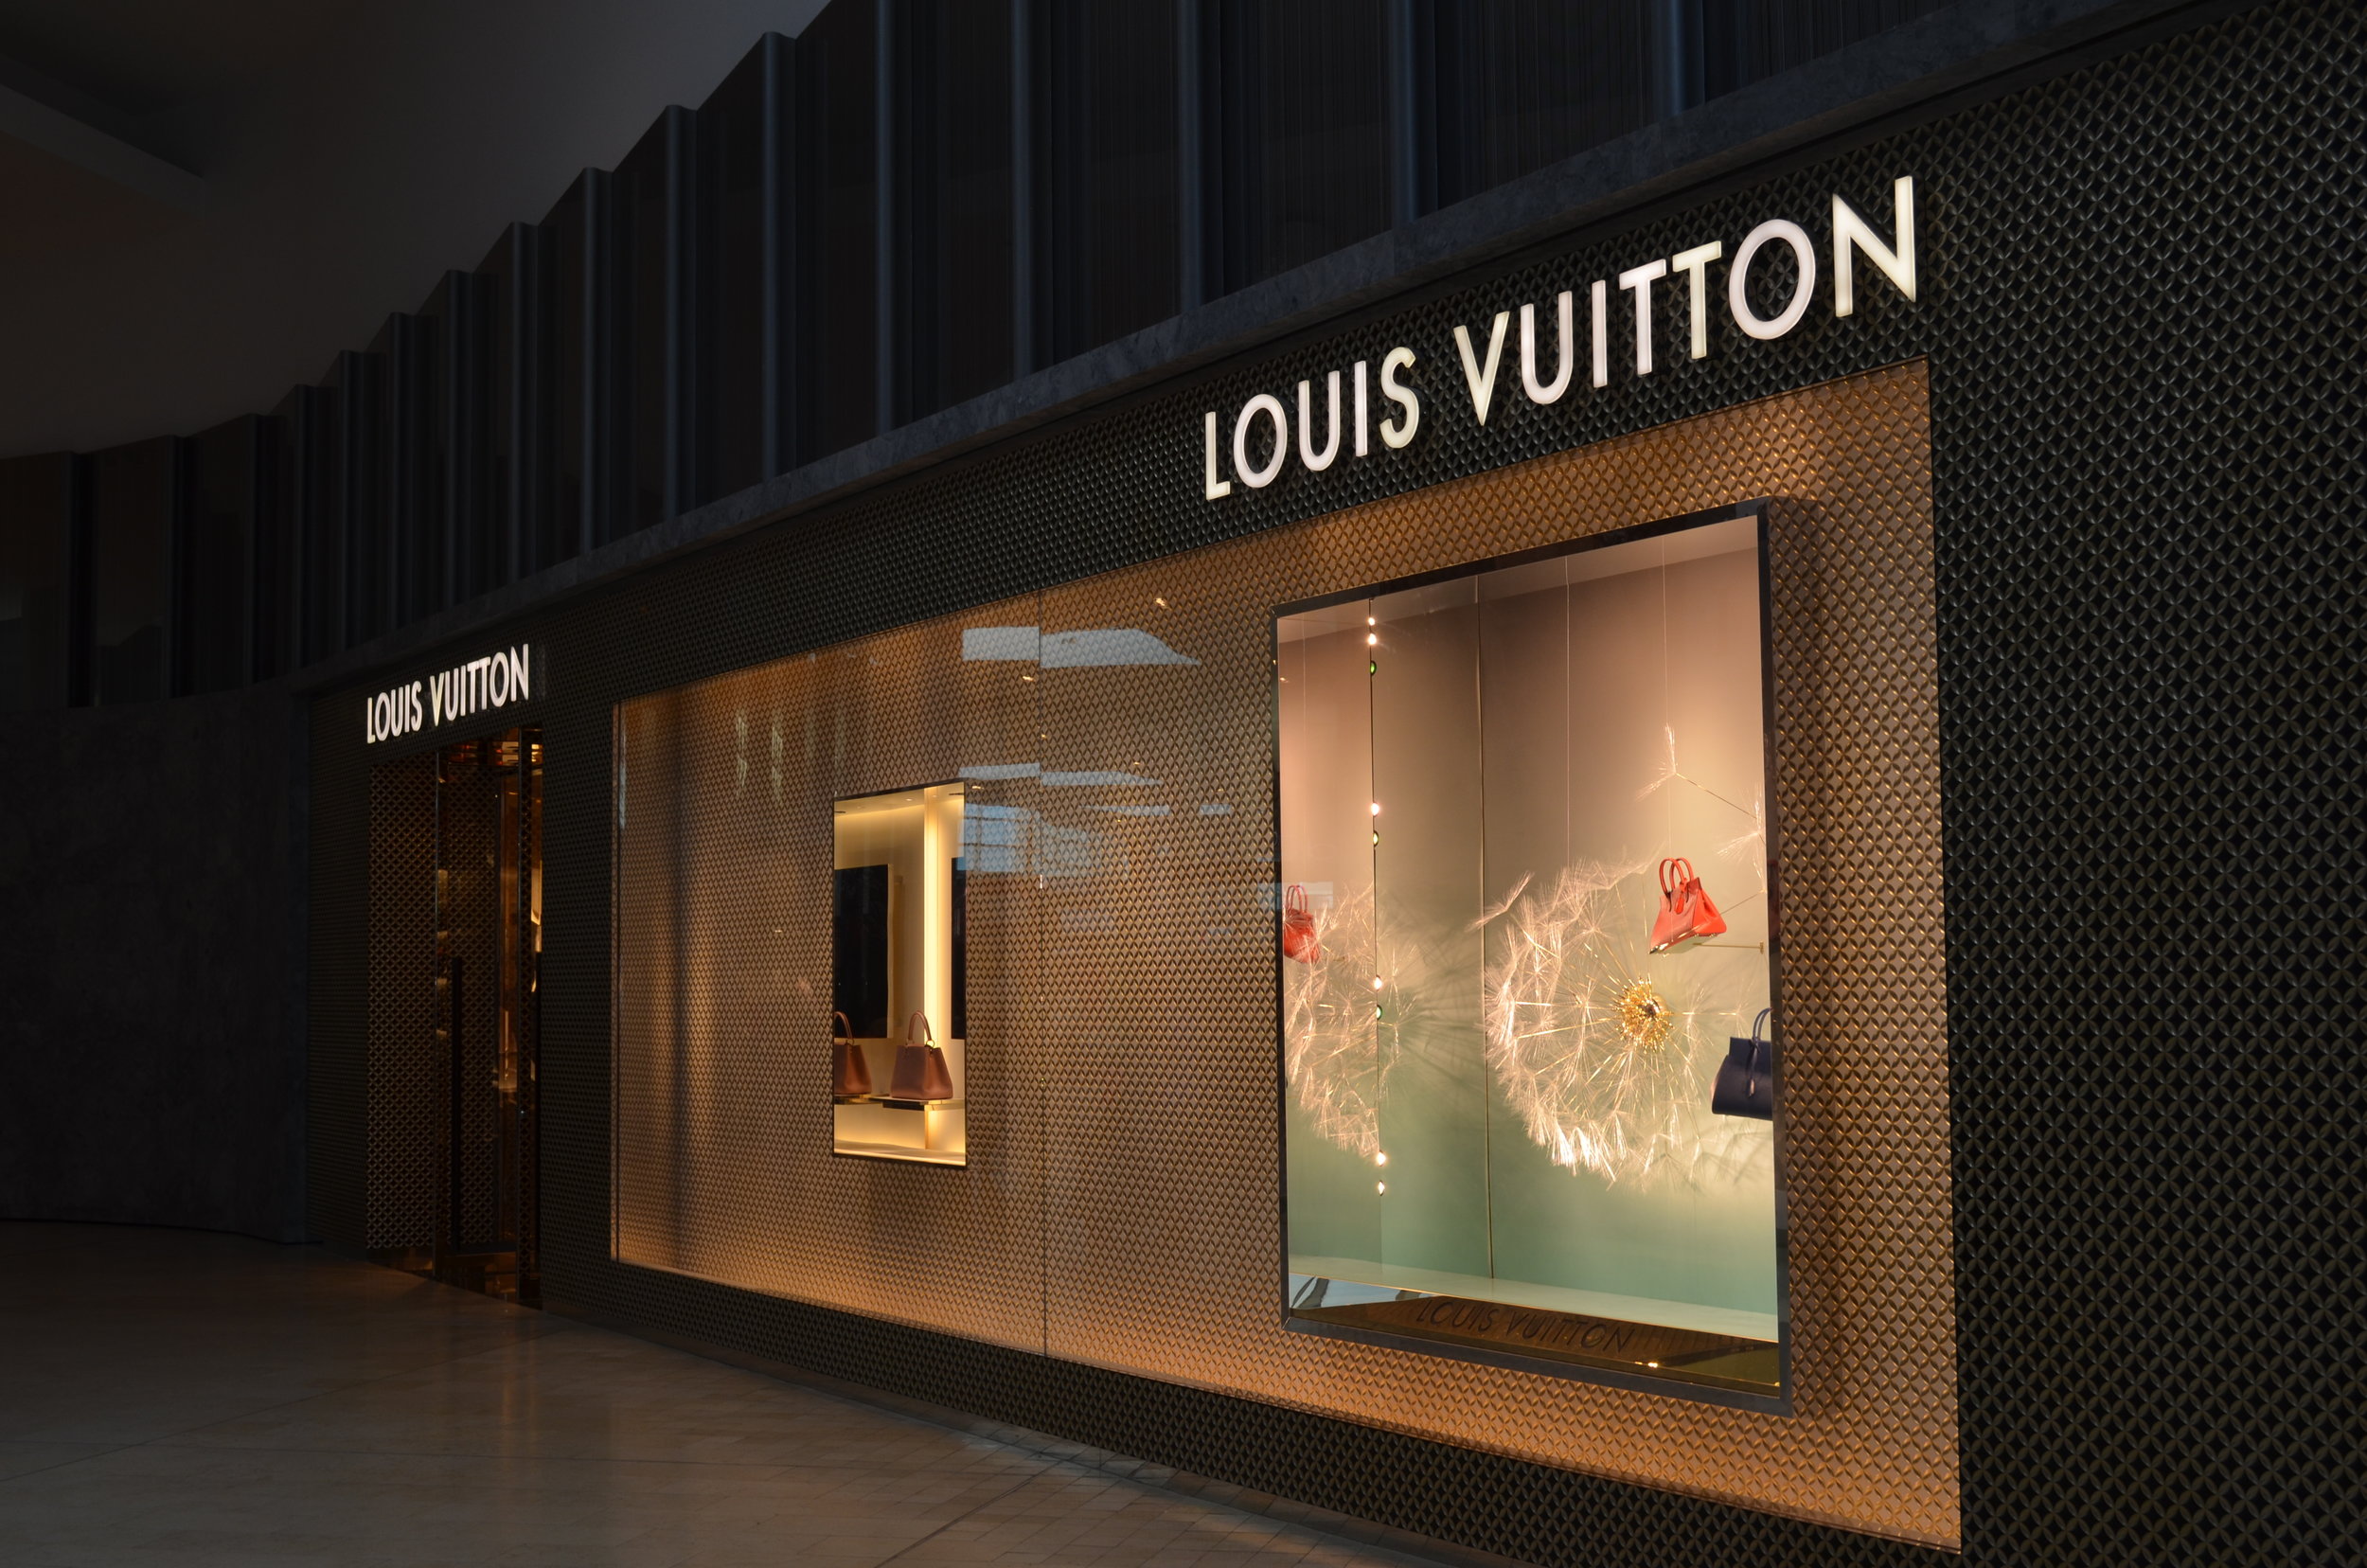 Louis Vuitton Malletier — HIGHFASHIONPASSION